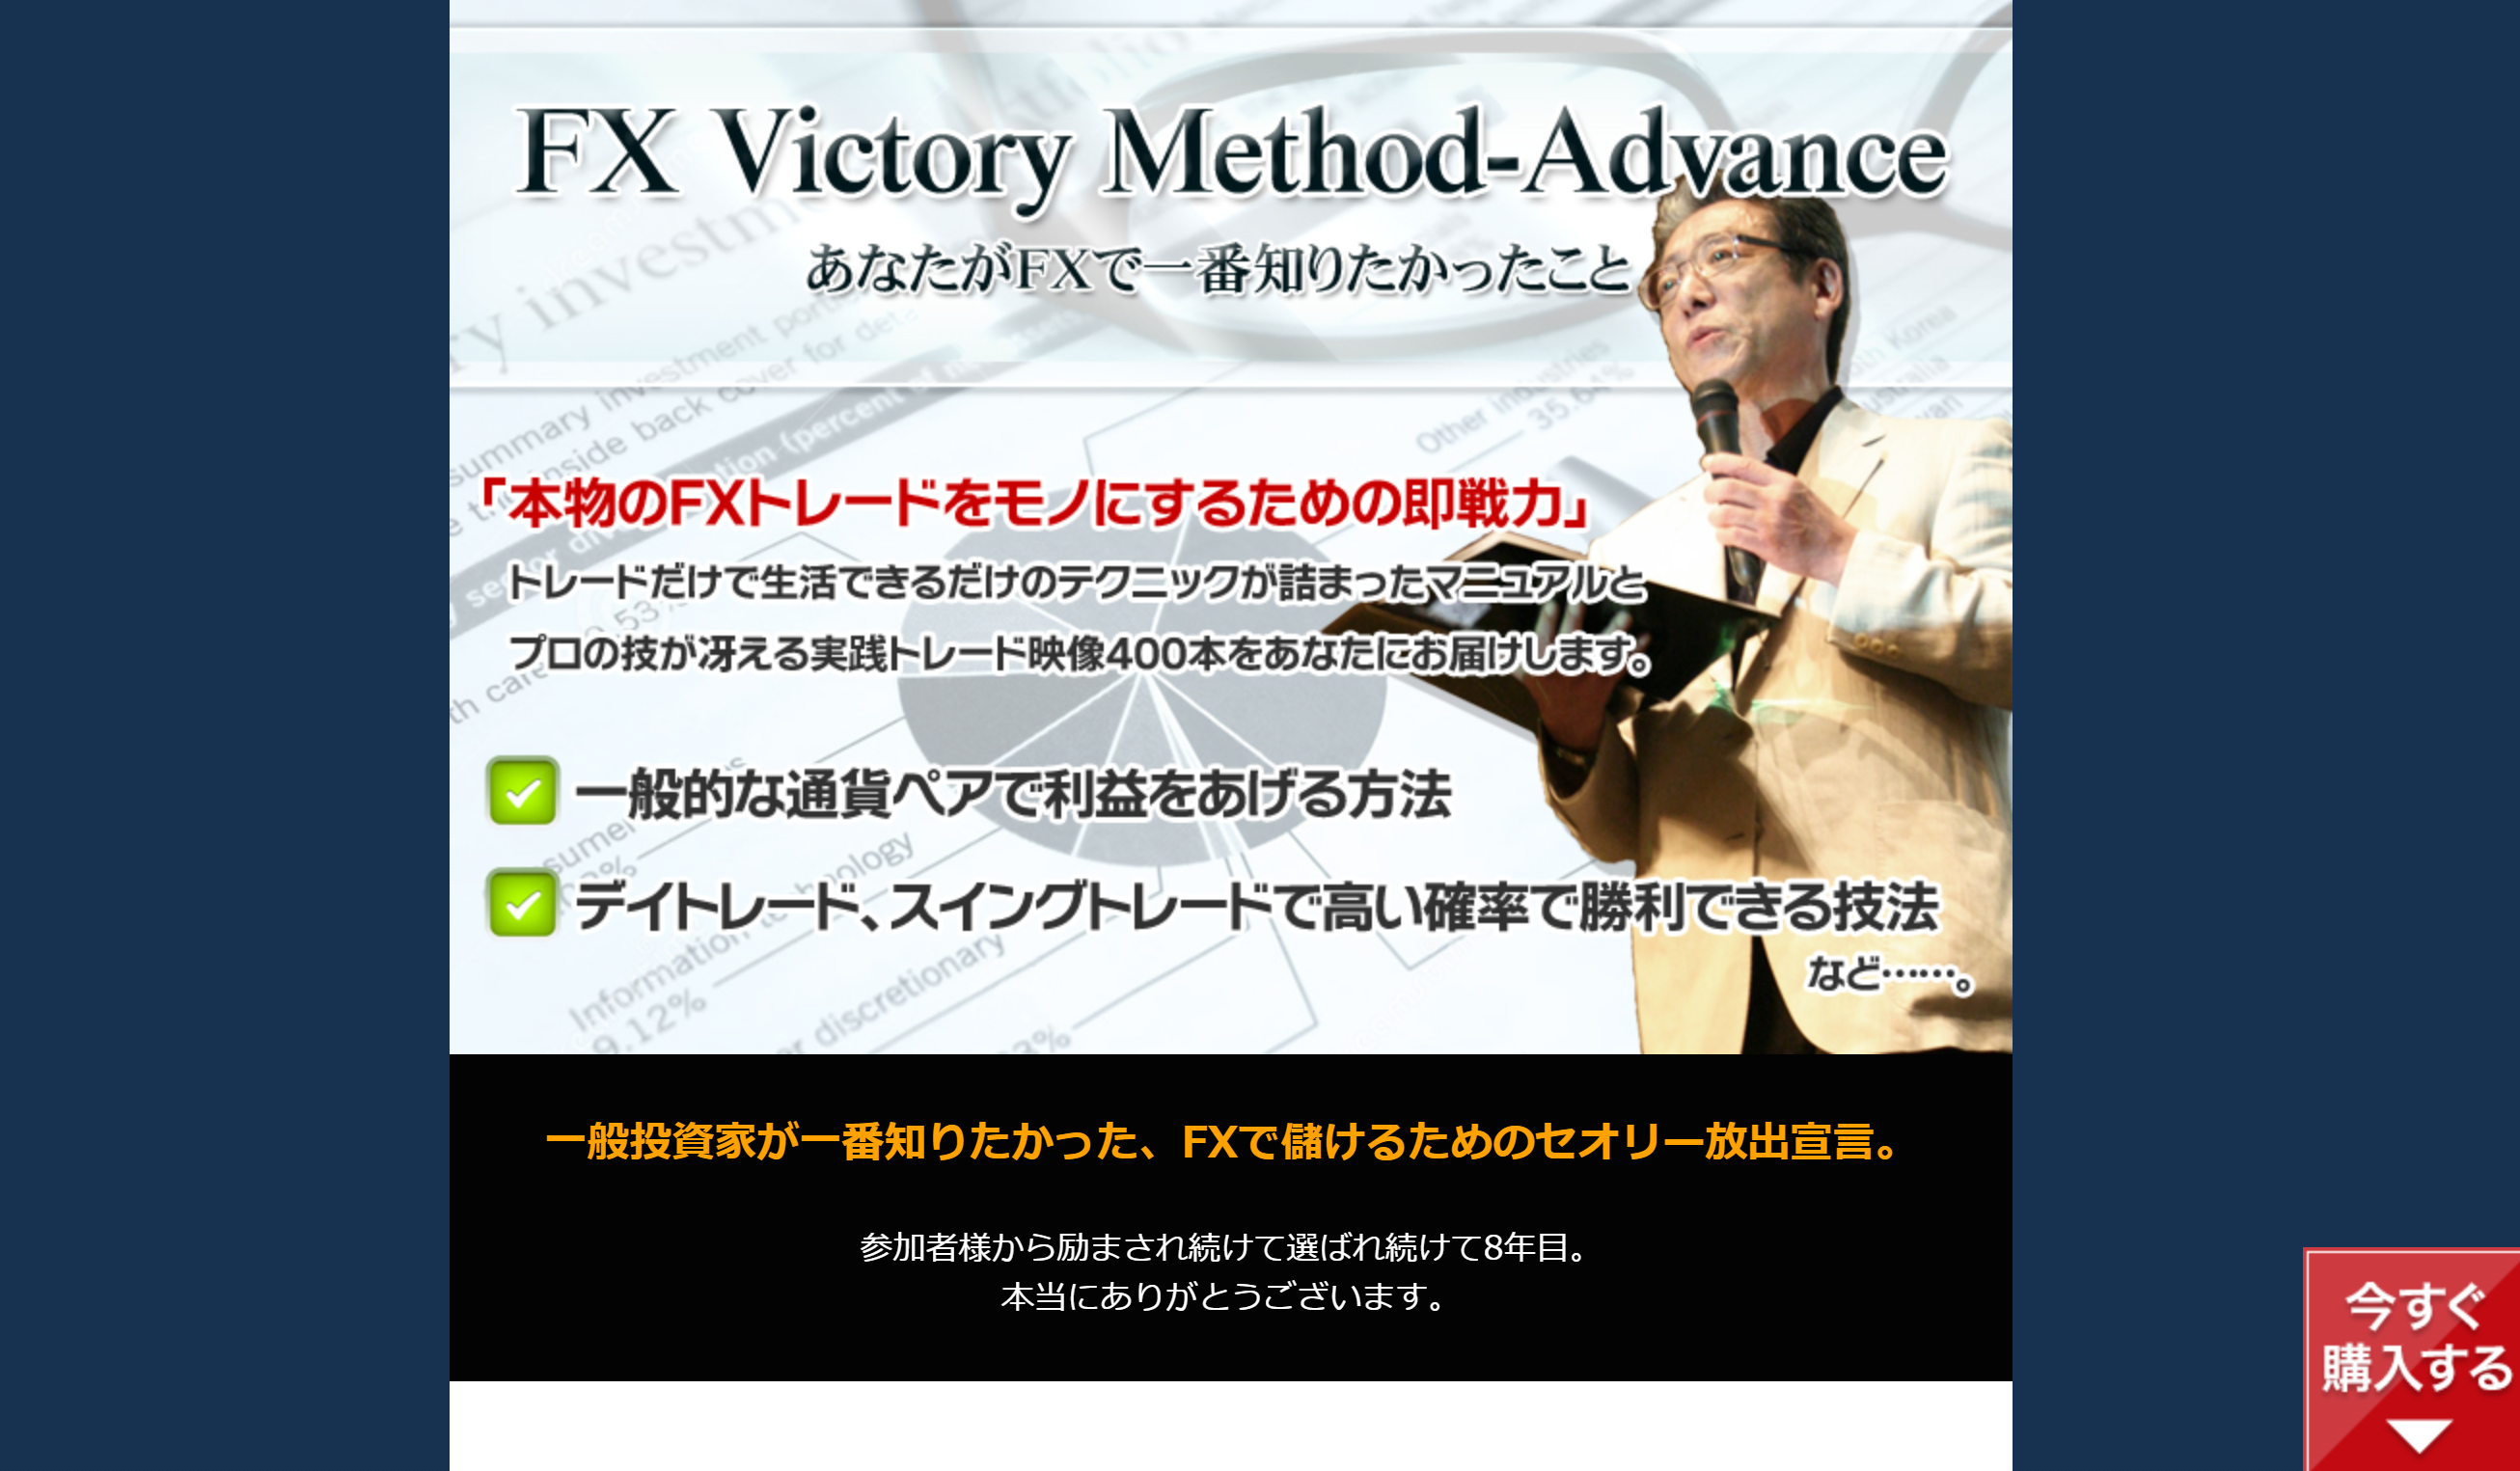 FX Victory Method-Advance